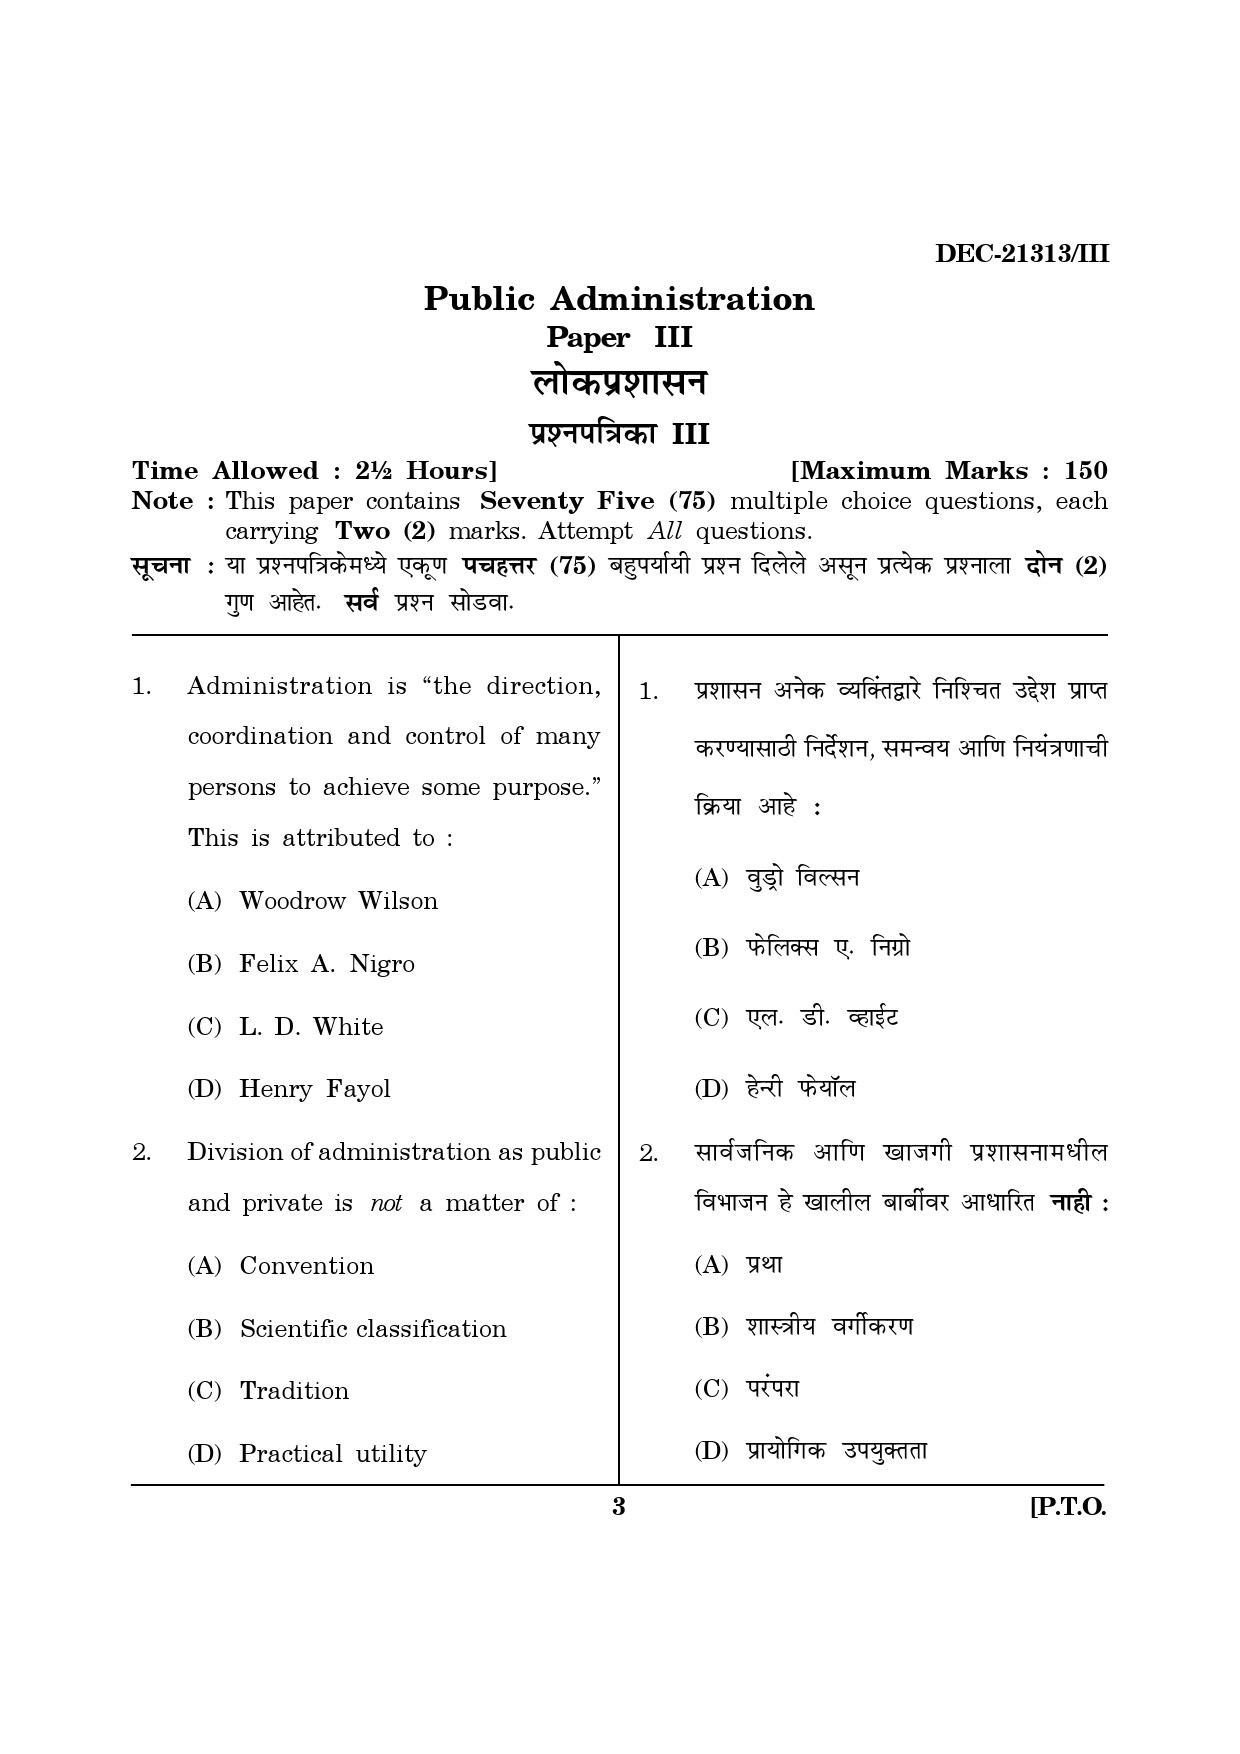 Maharashtra SET Public Administration Question Paper III December 2013 2